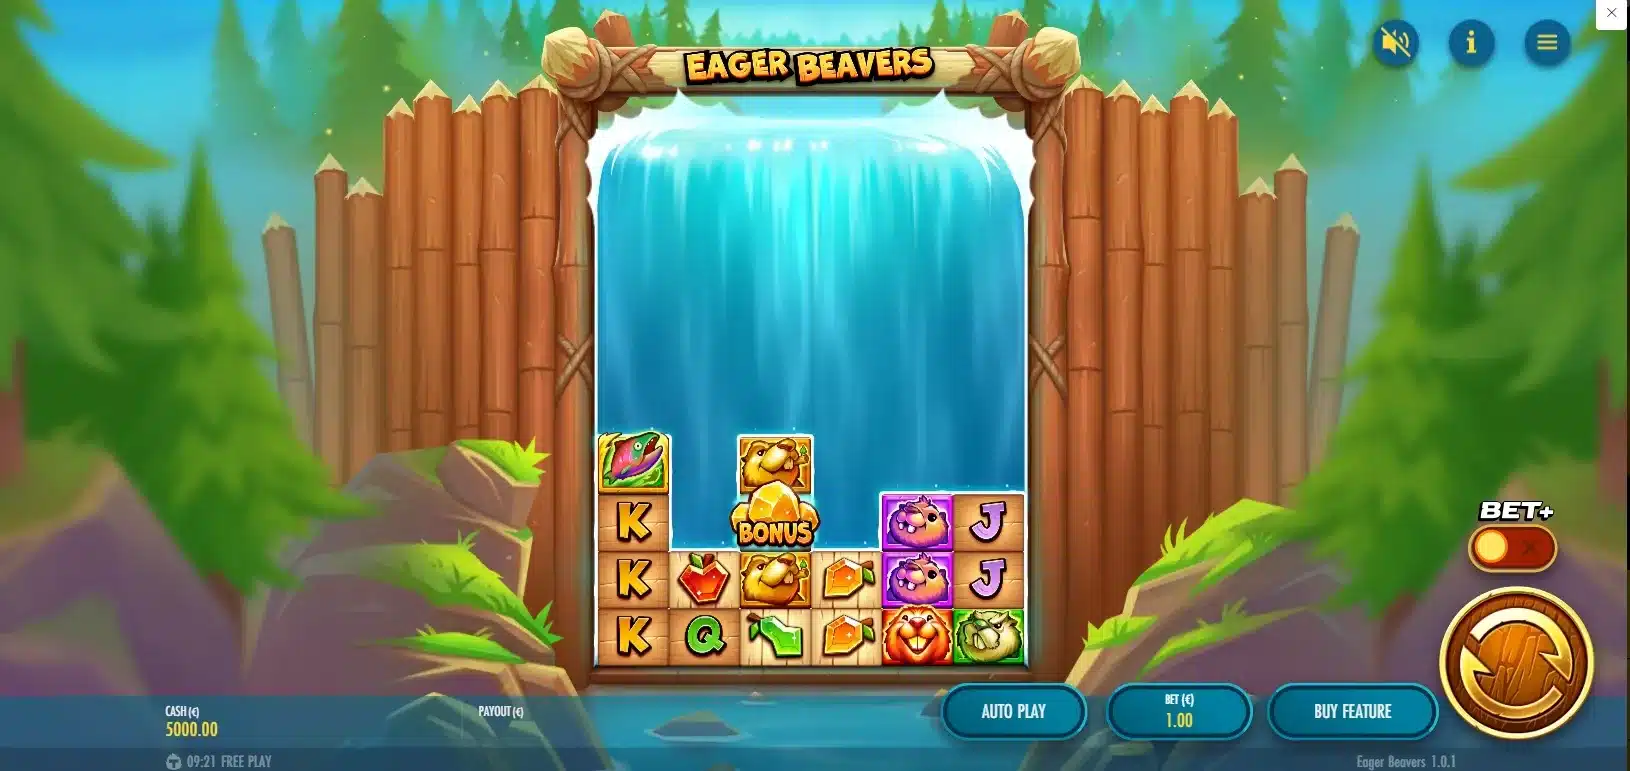 Eager Beavers - Base Game